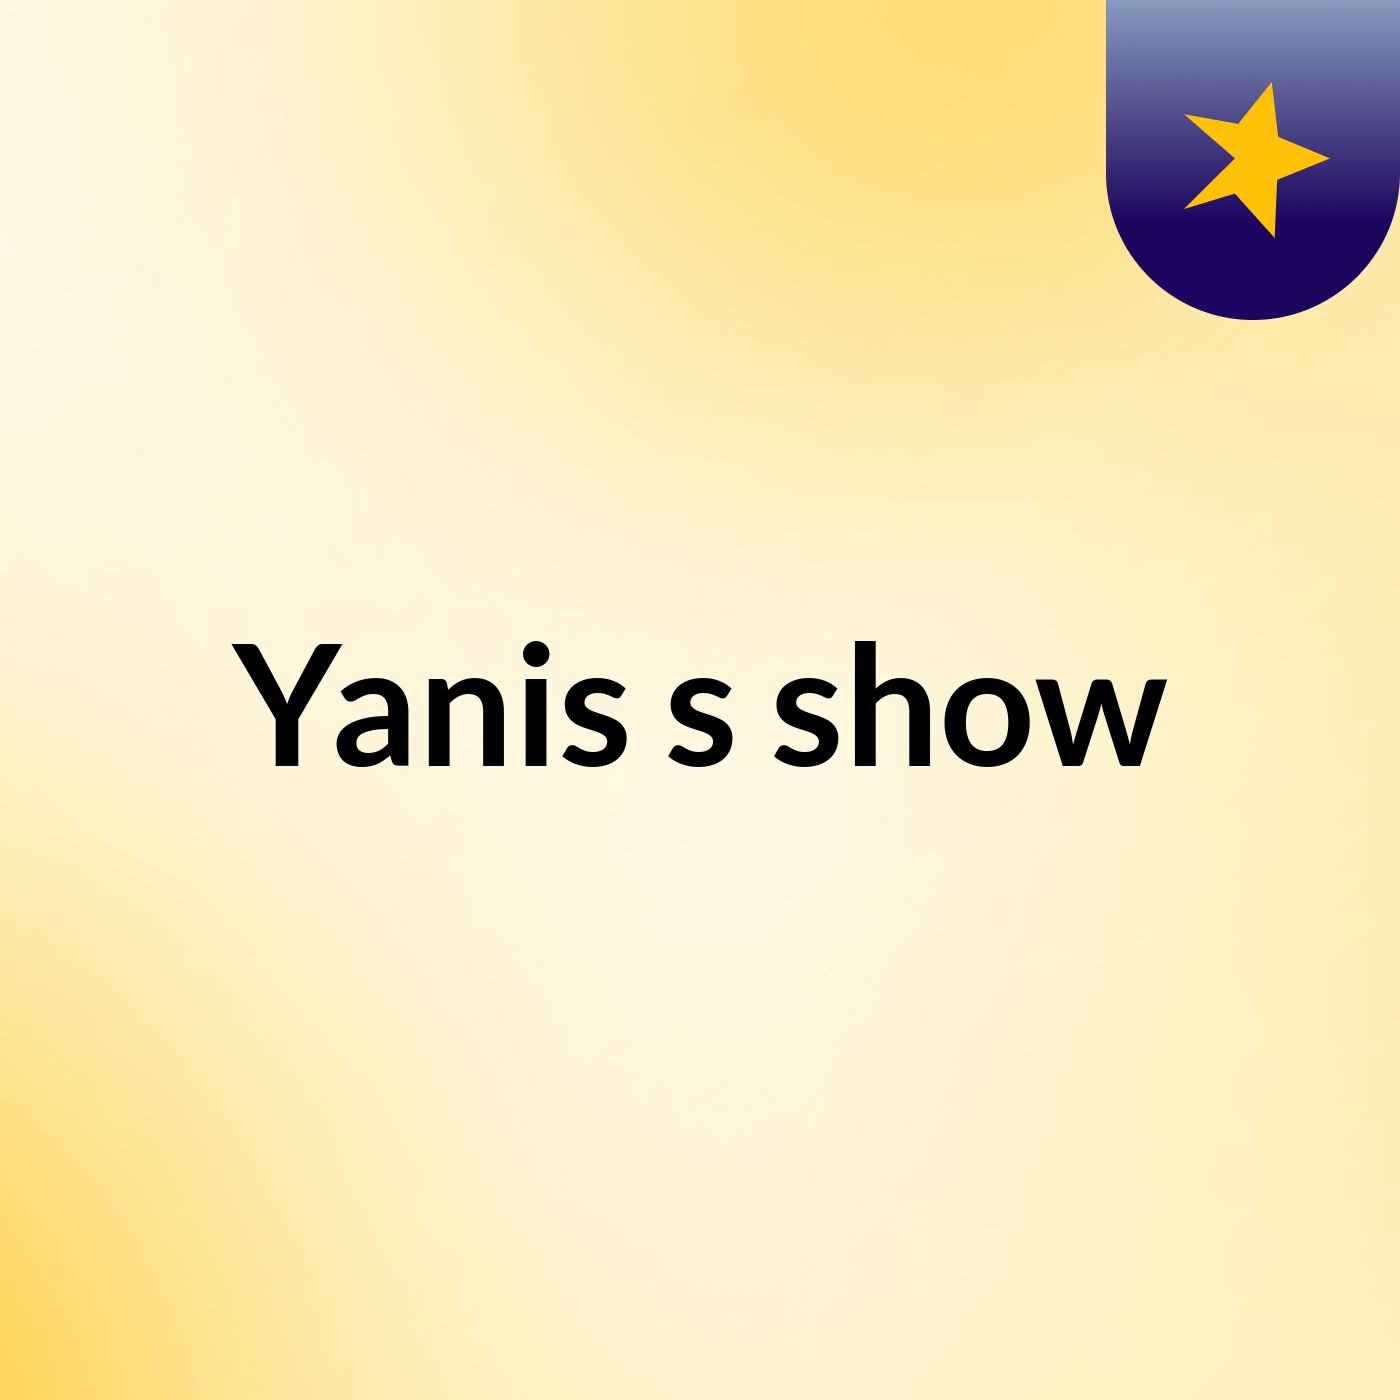 Yanis's show